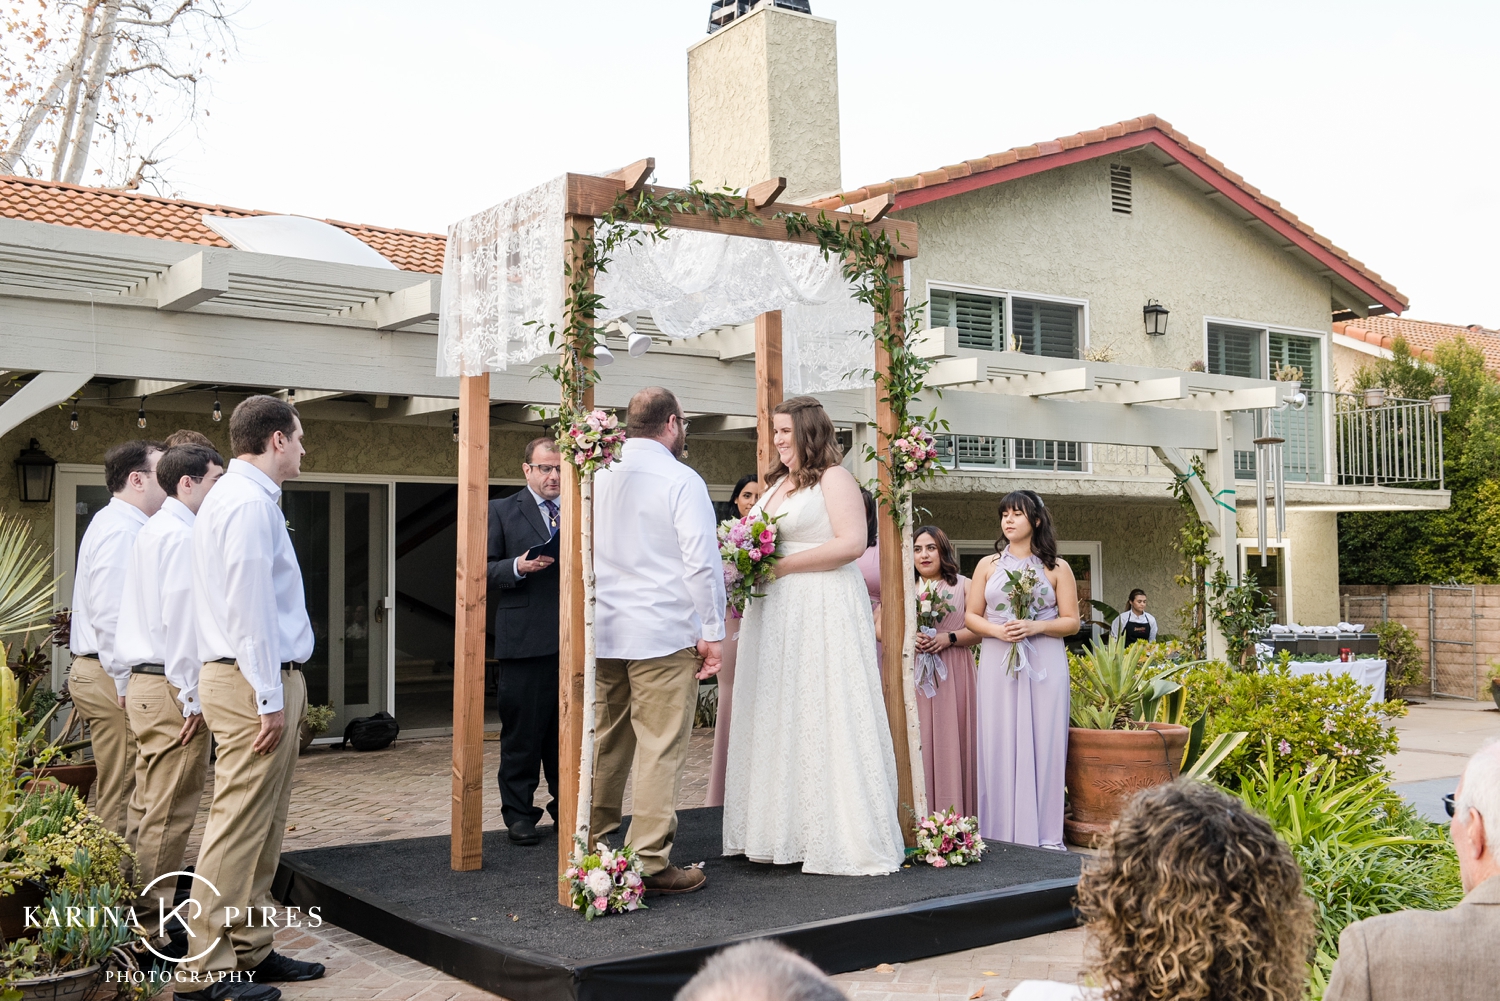 Sarah and Jordan’s Intimate Los Angeles Backyard Wedding